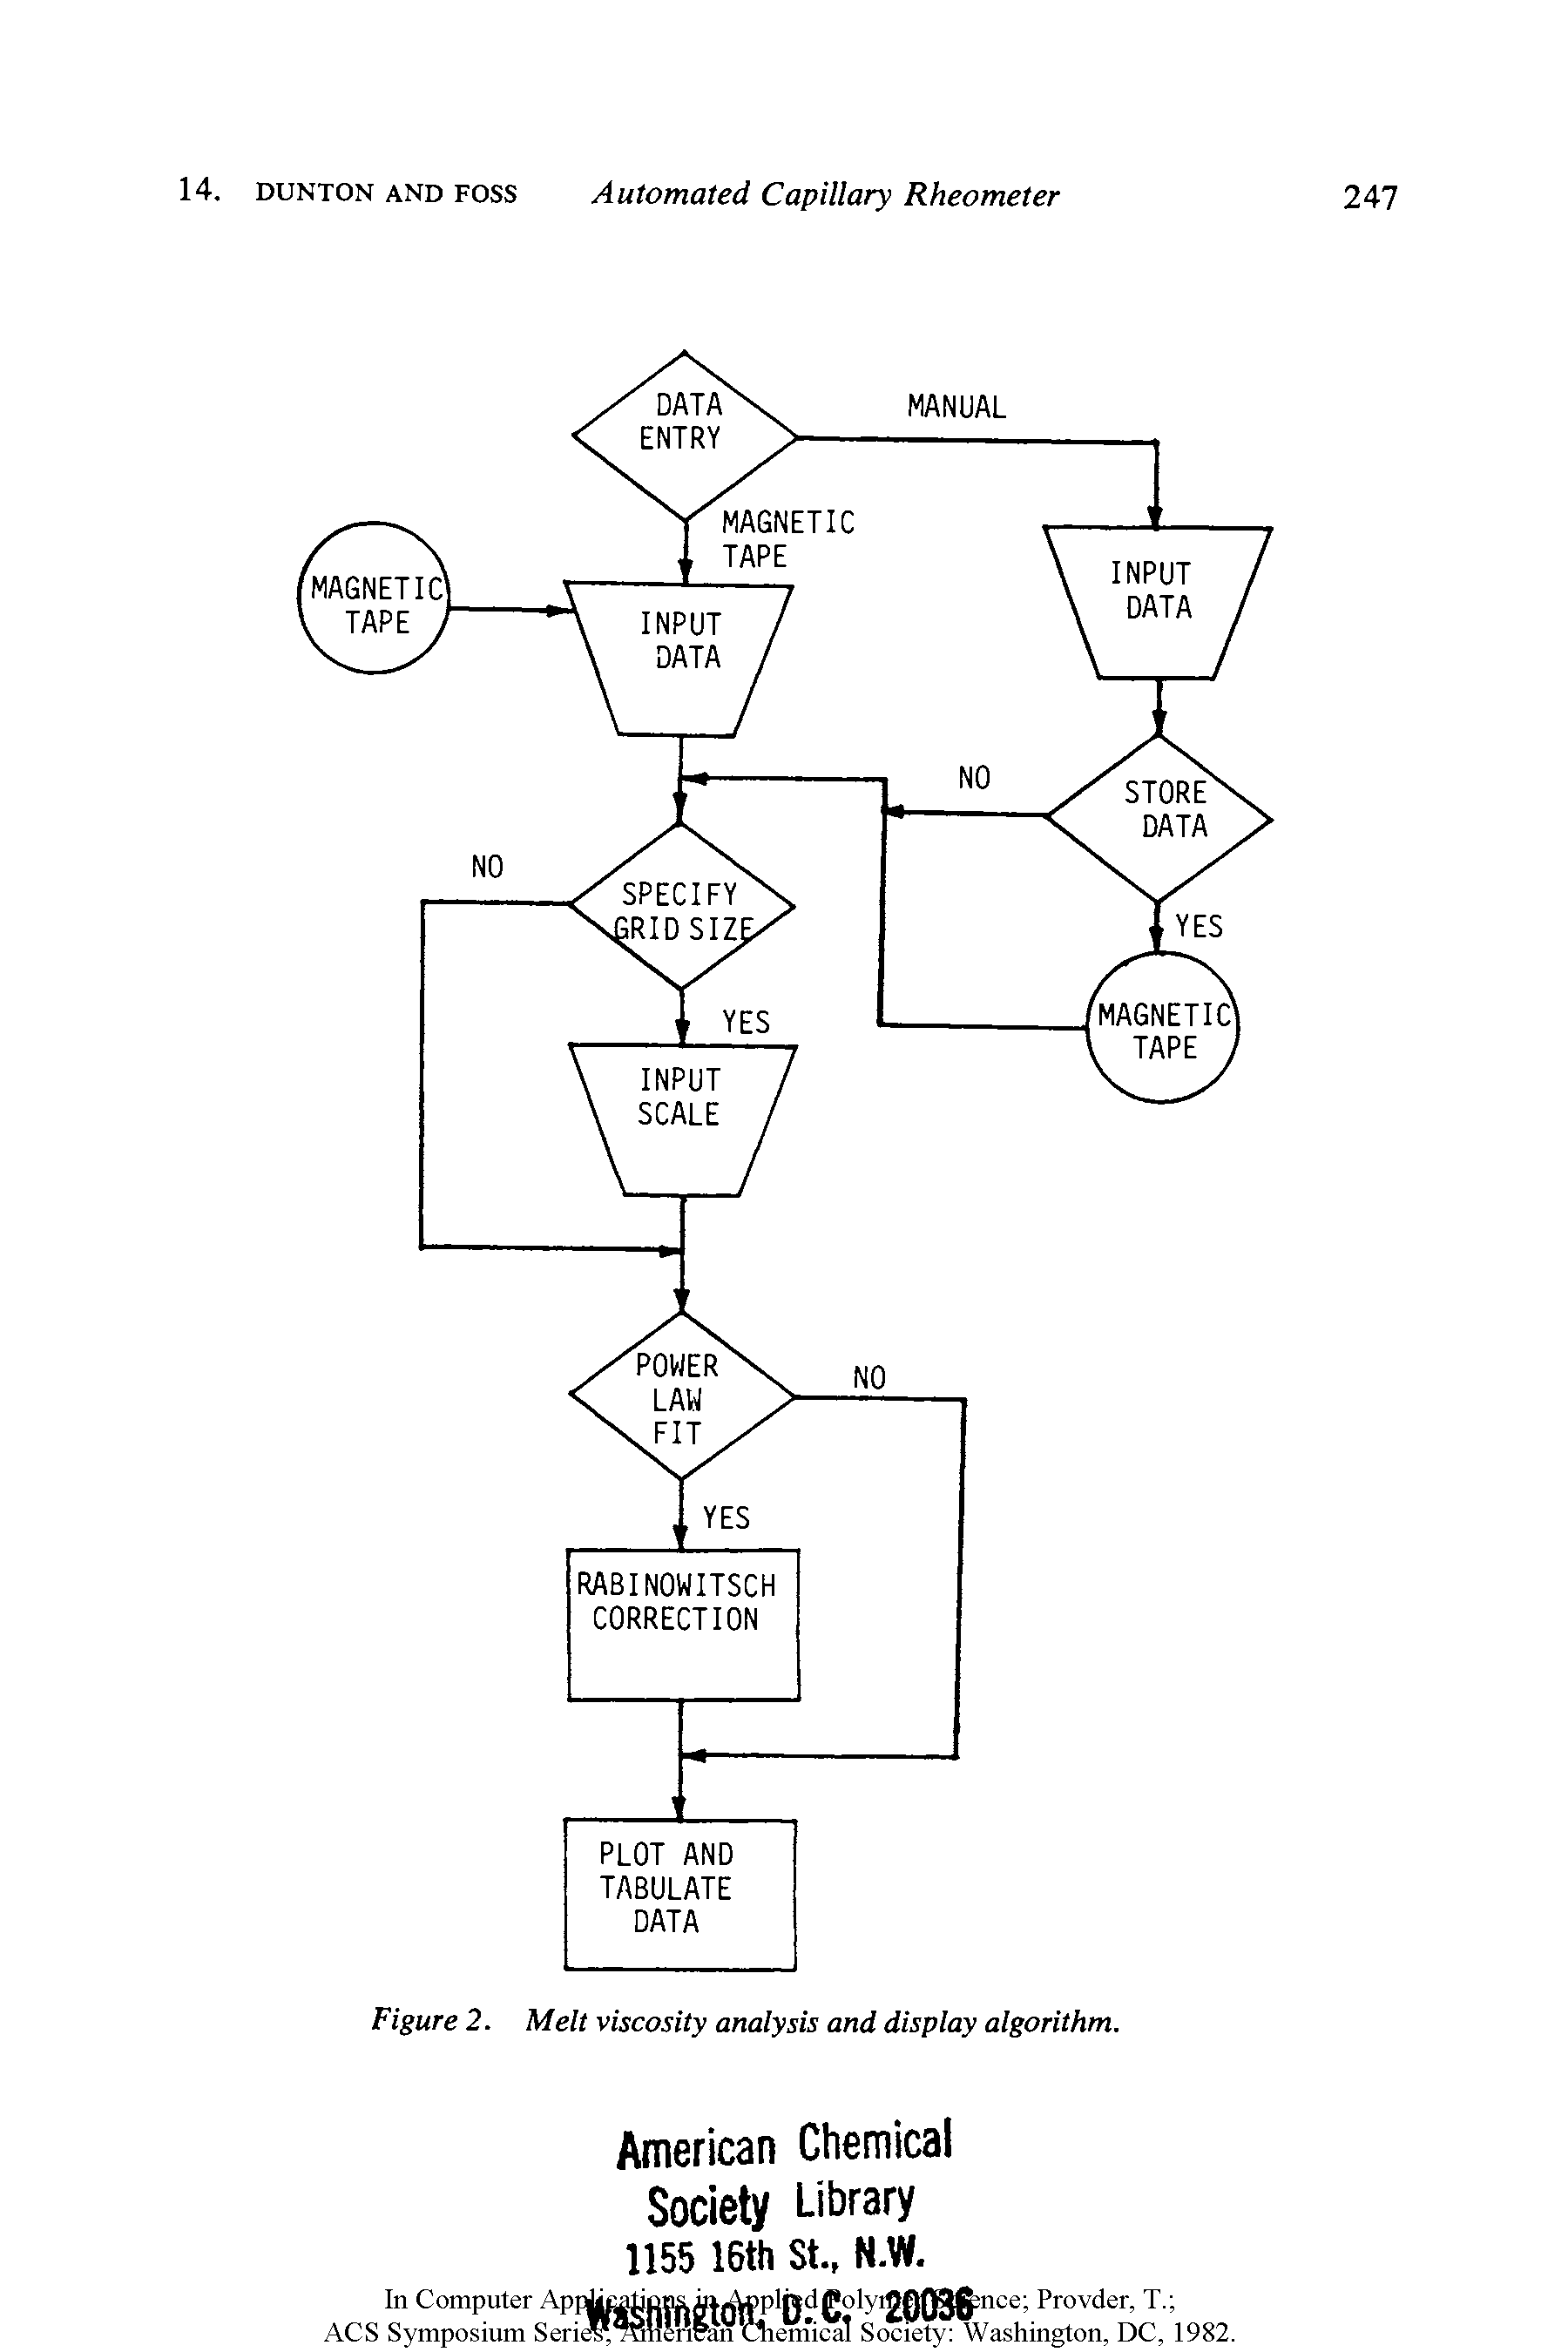 Figure 2. Melt viscosity analysis and display algorithm.